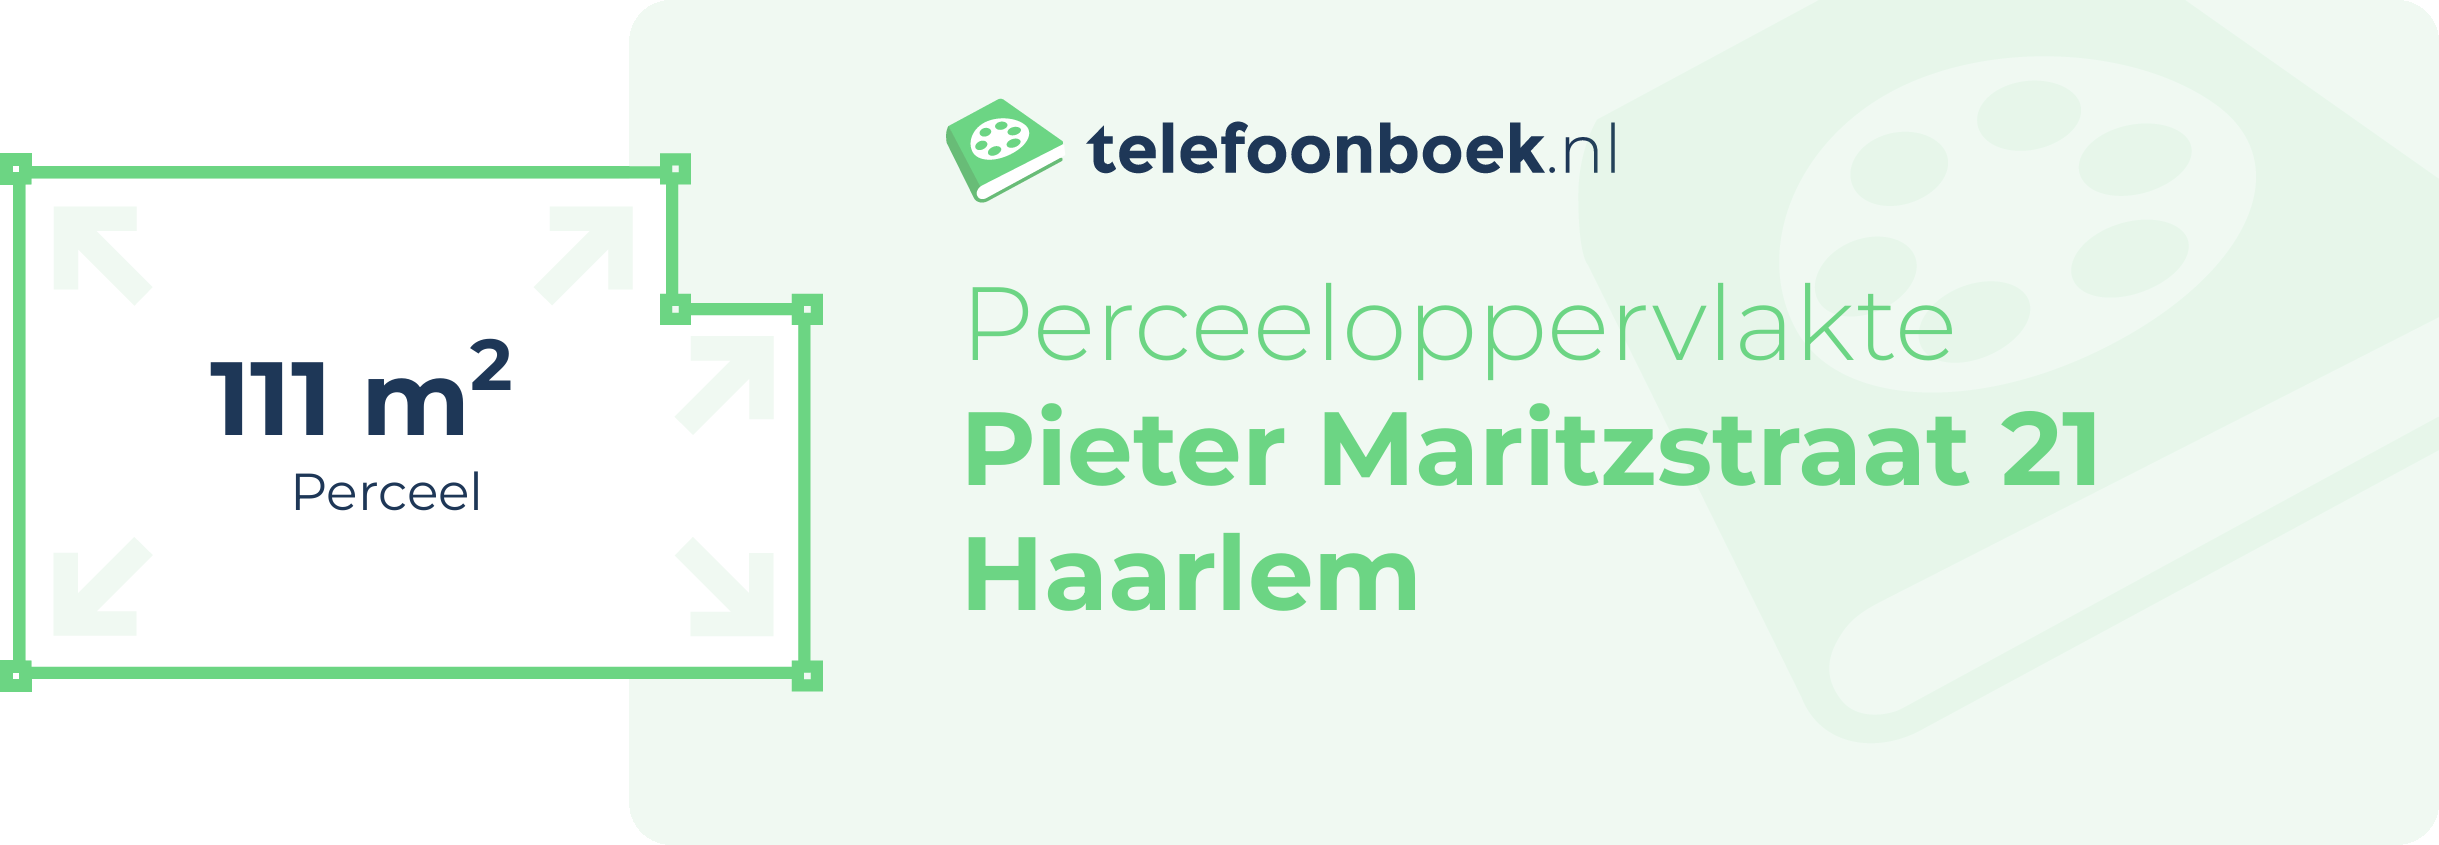 Perceeloppervlakte Pieter Maritzstraat 21 Haarlem